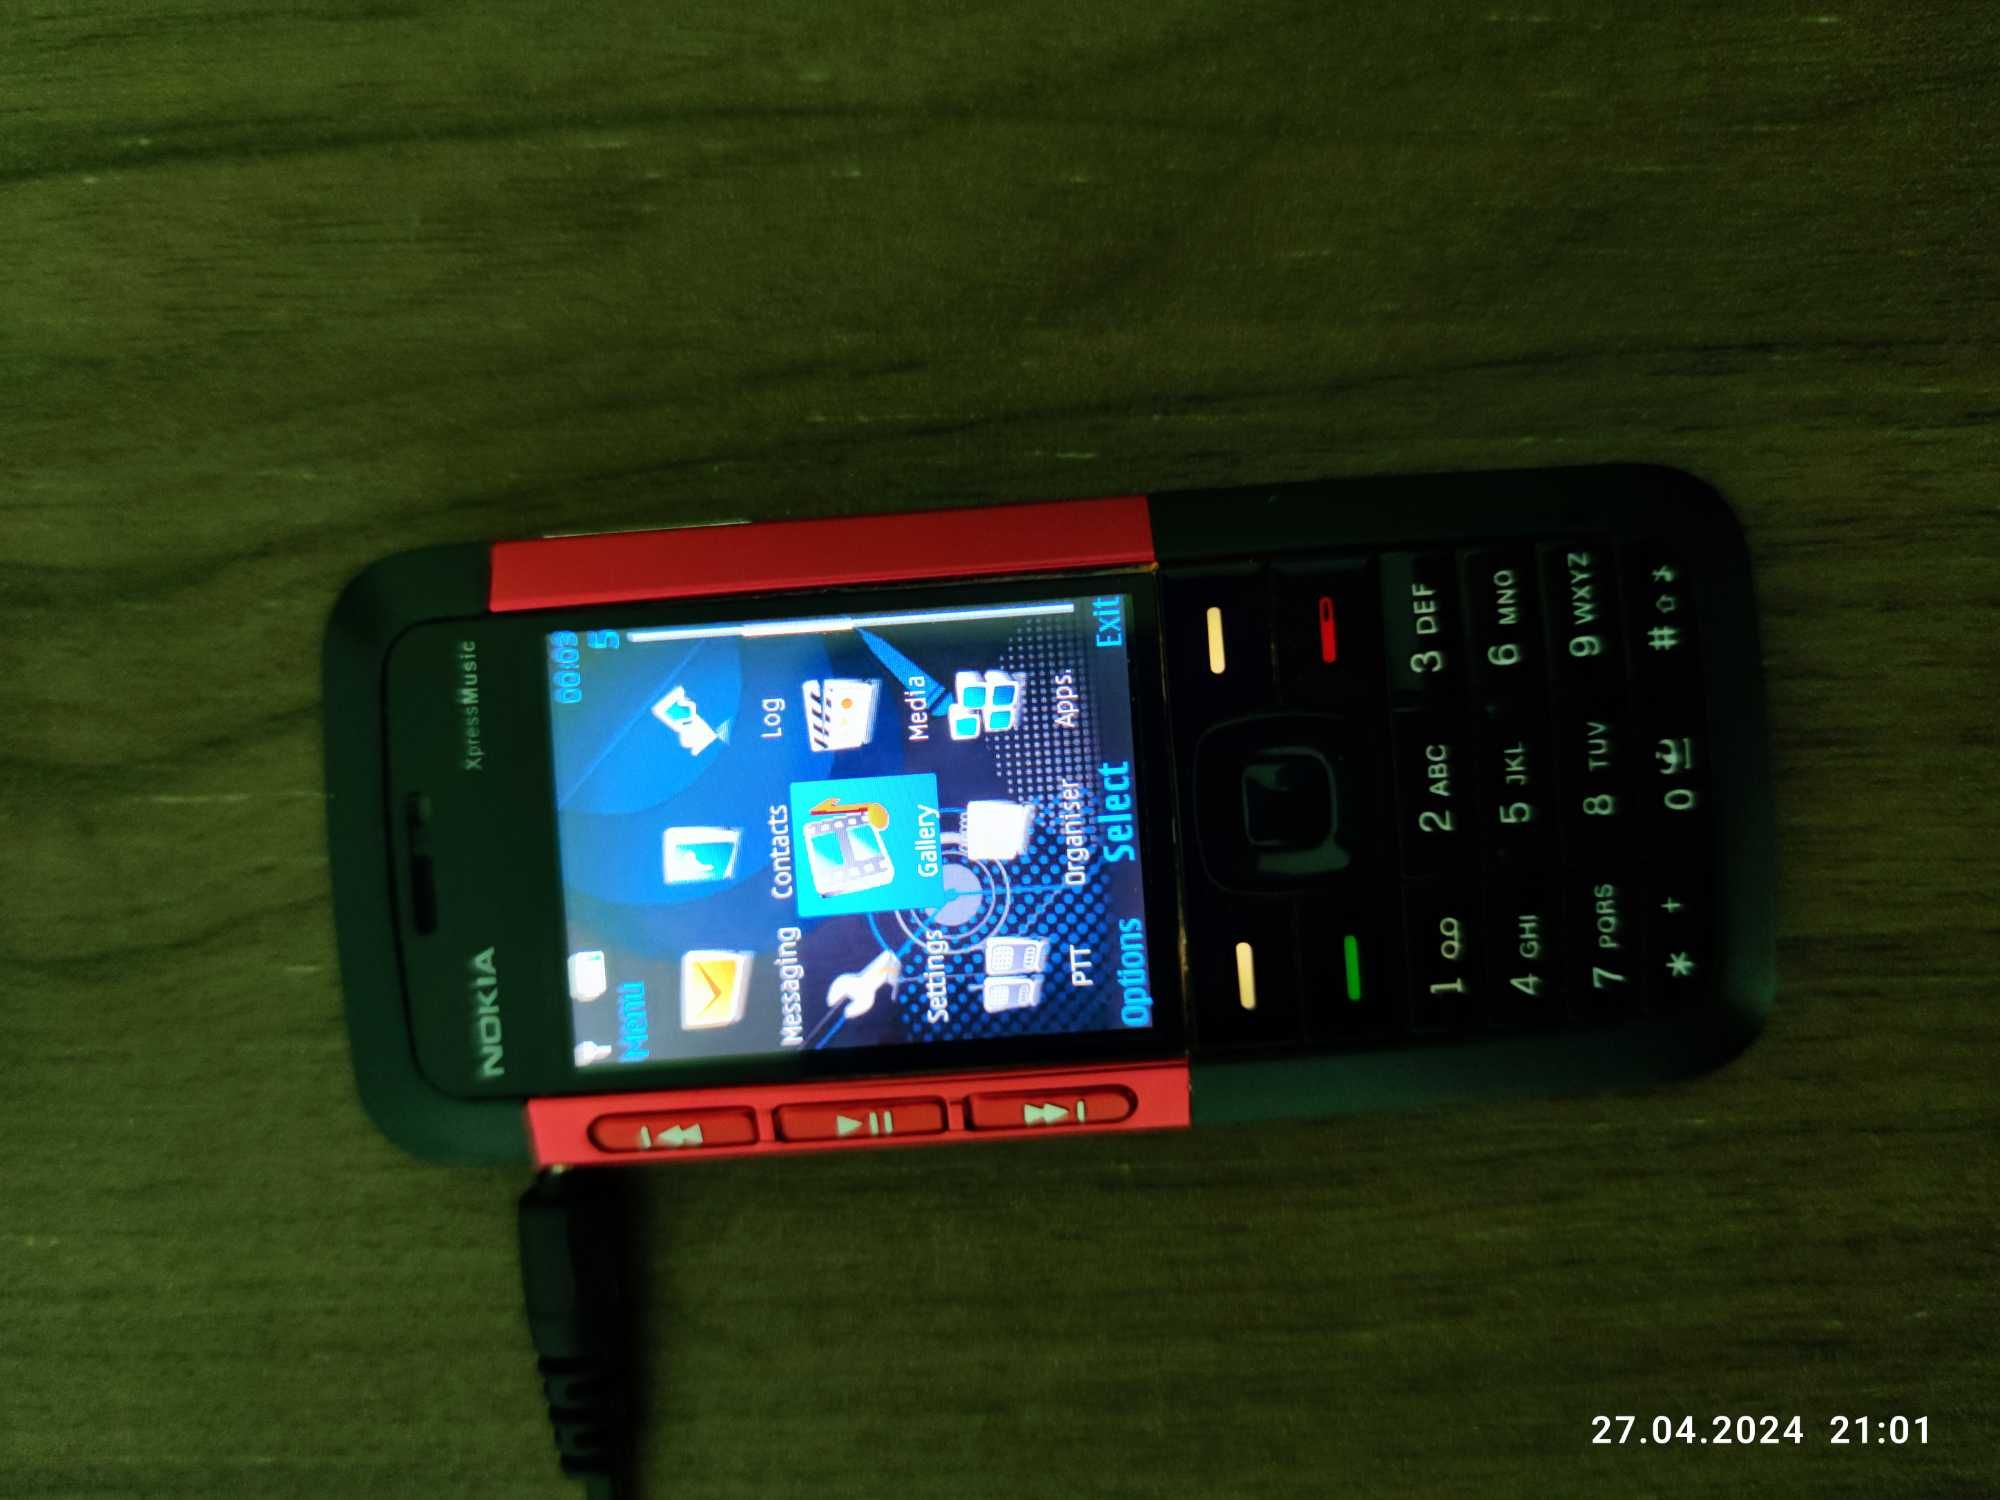 Nokia 5310 express music